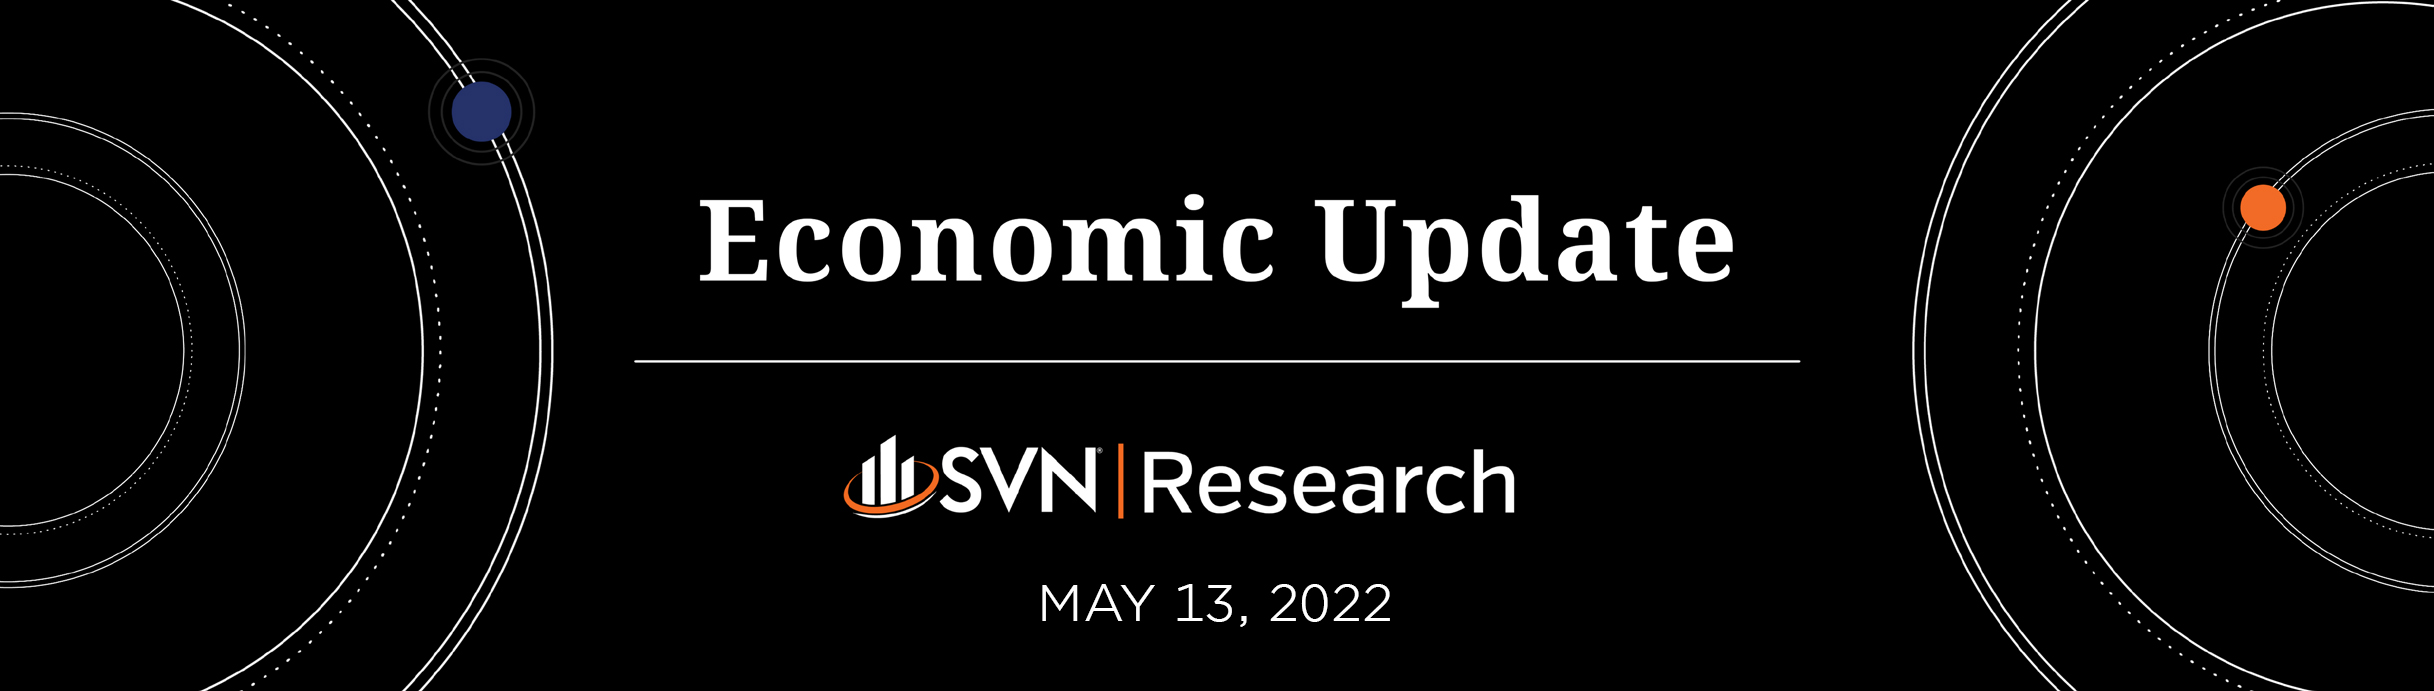 SVN | Research Economic Update 5.13.2022